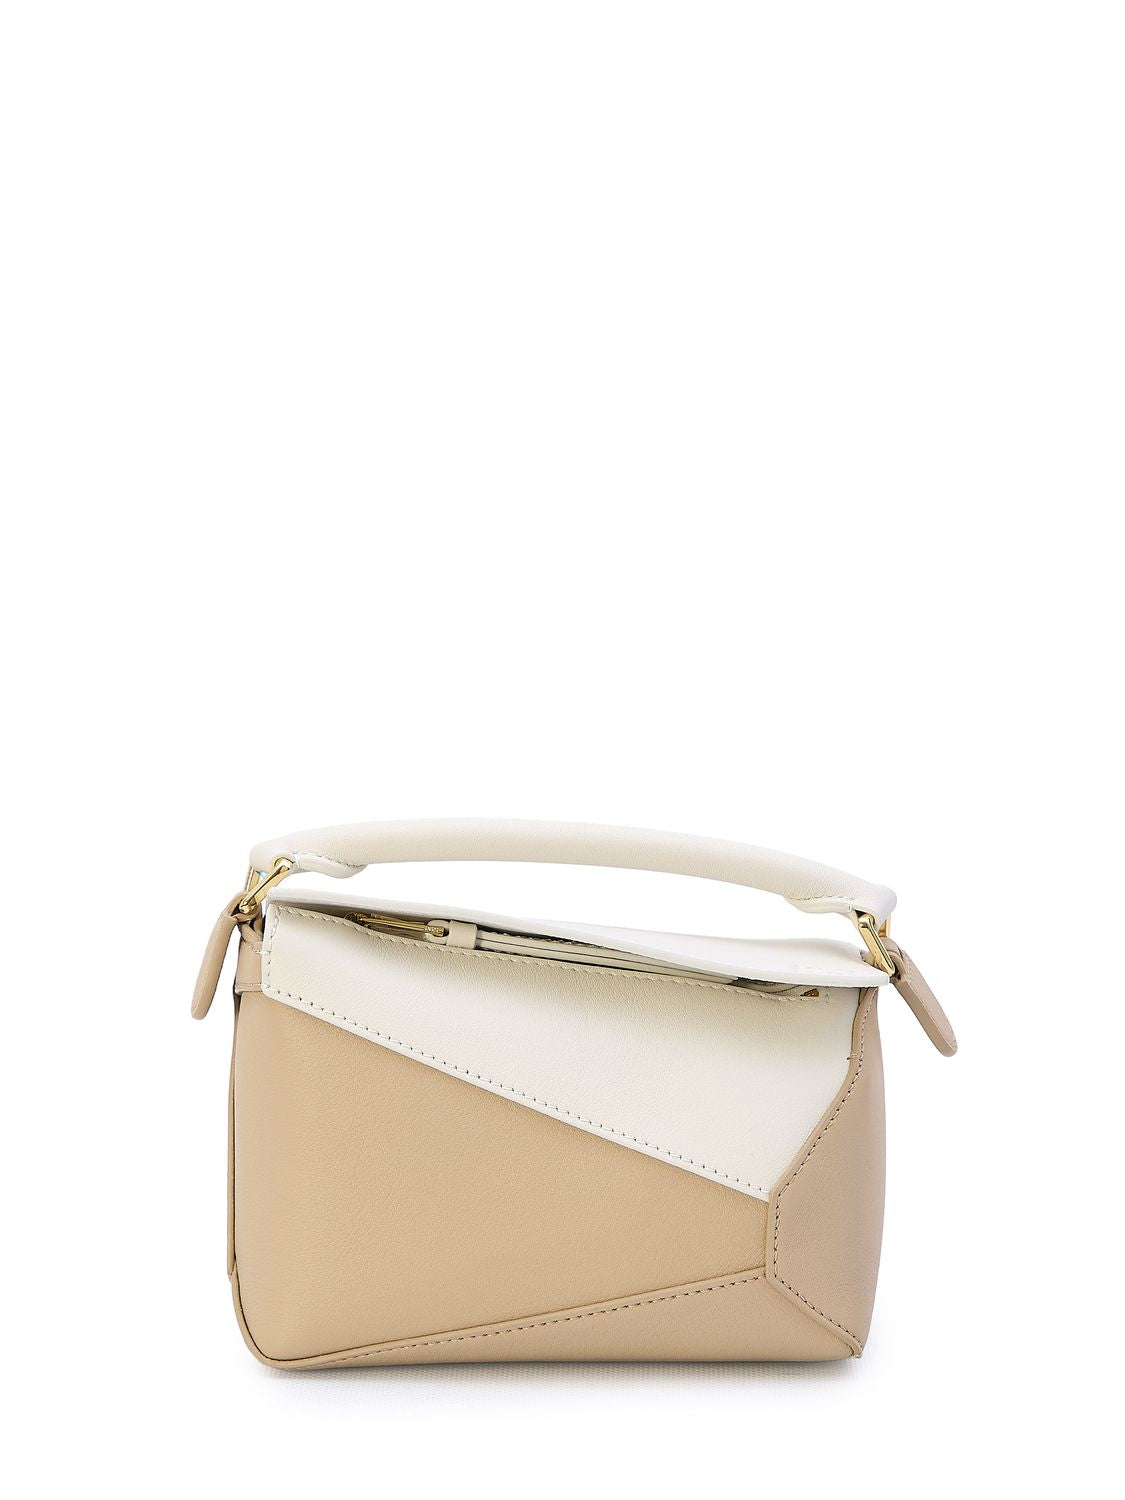 LOEWE Mini Puzzle Geometric Calfskin Handbag in White and Beige with Adjustable Strap 18x12.5x8cm